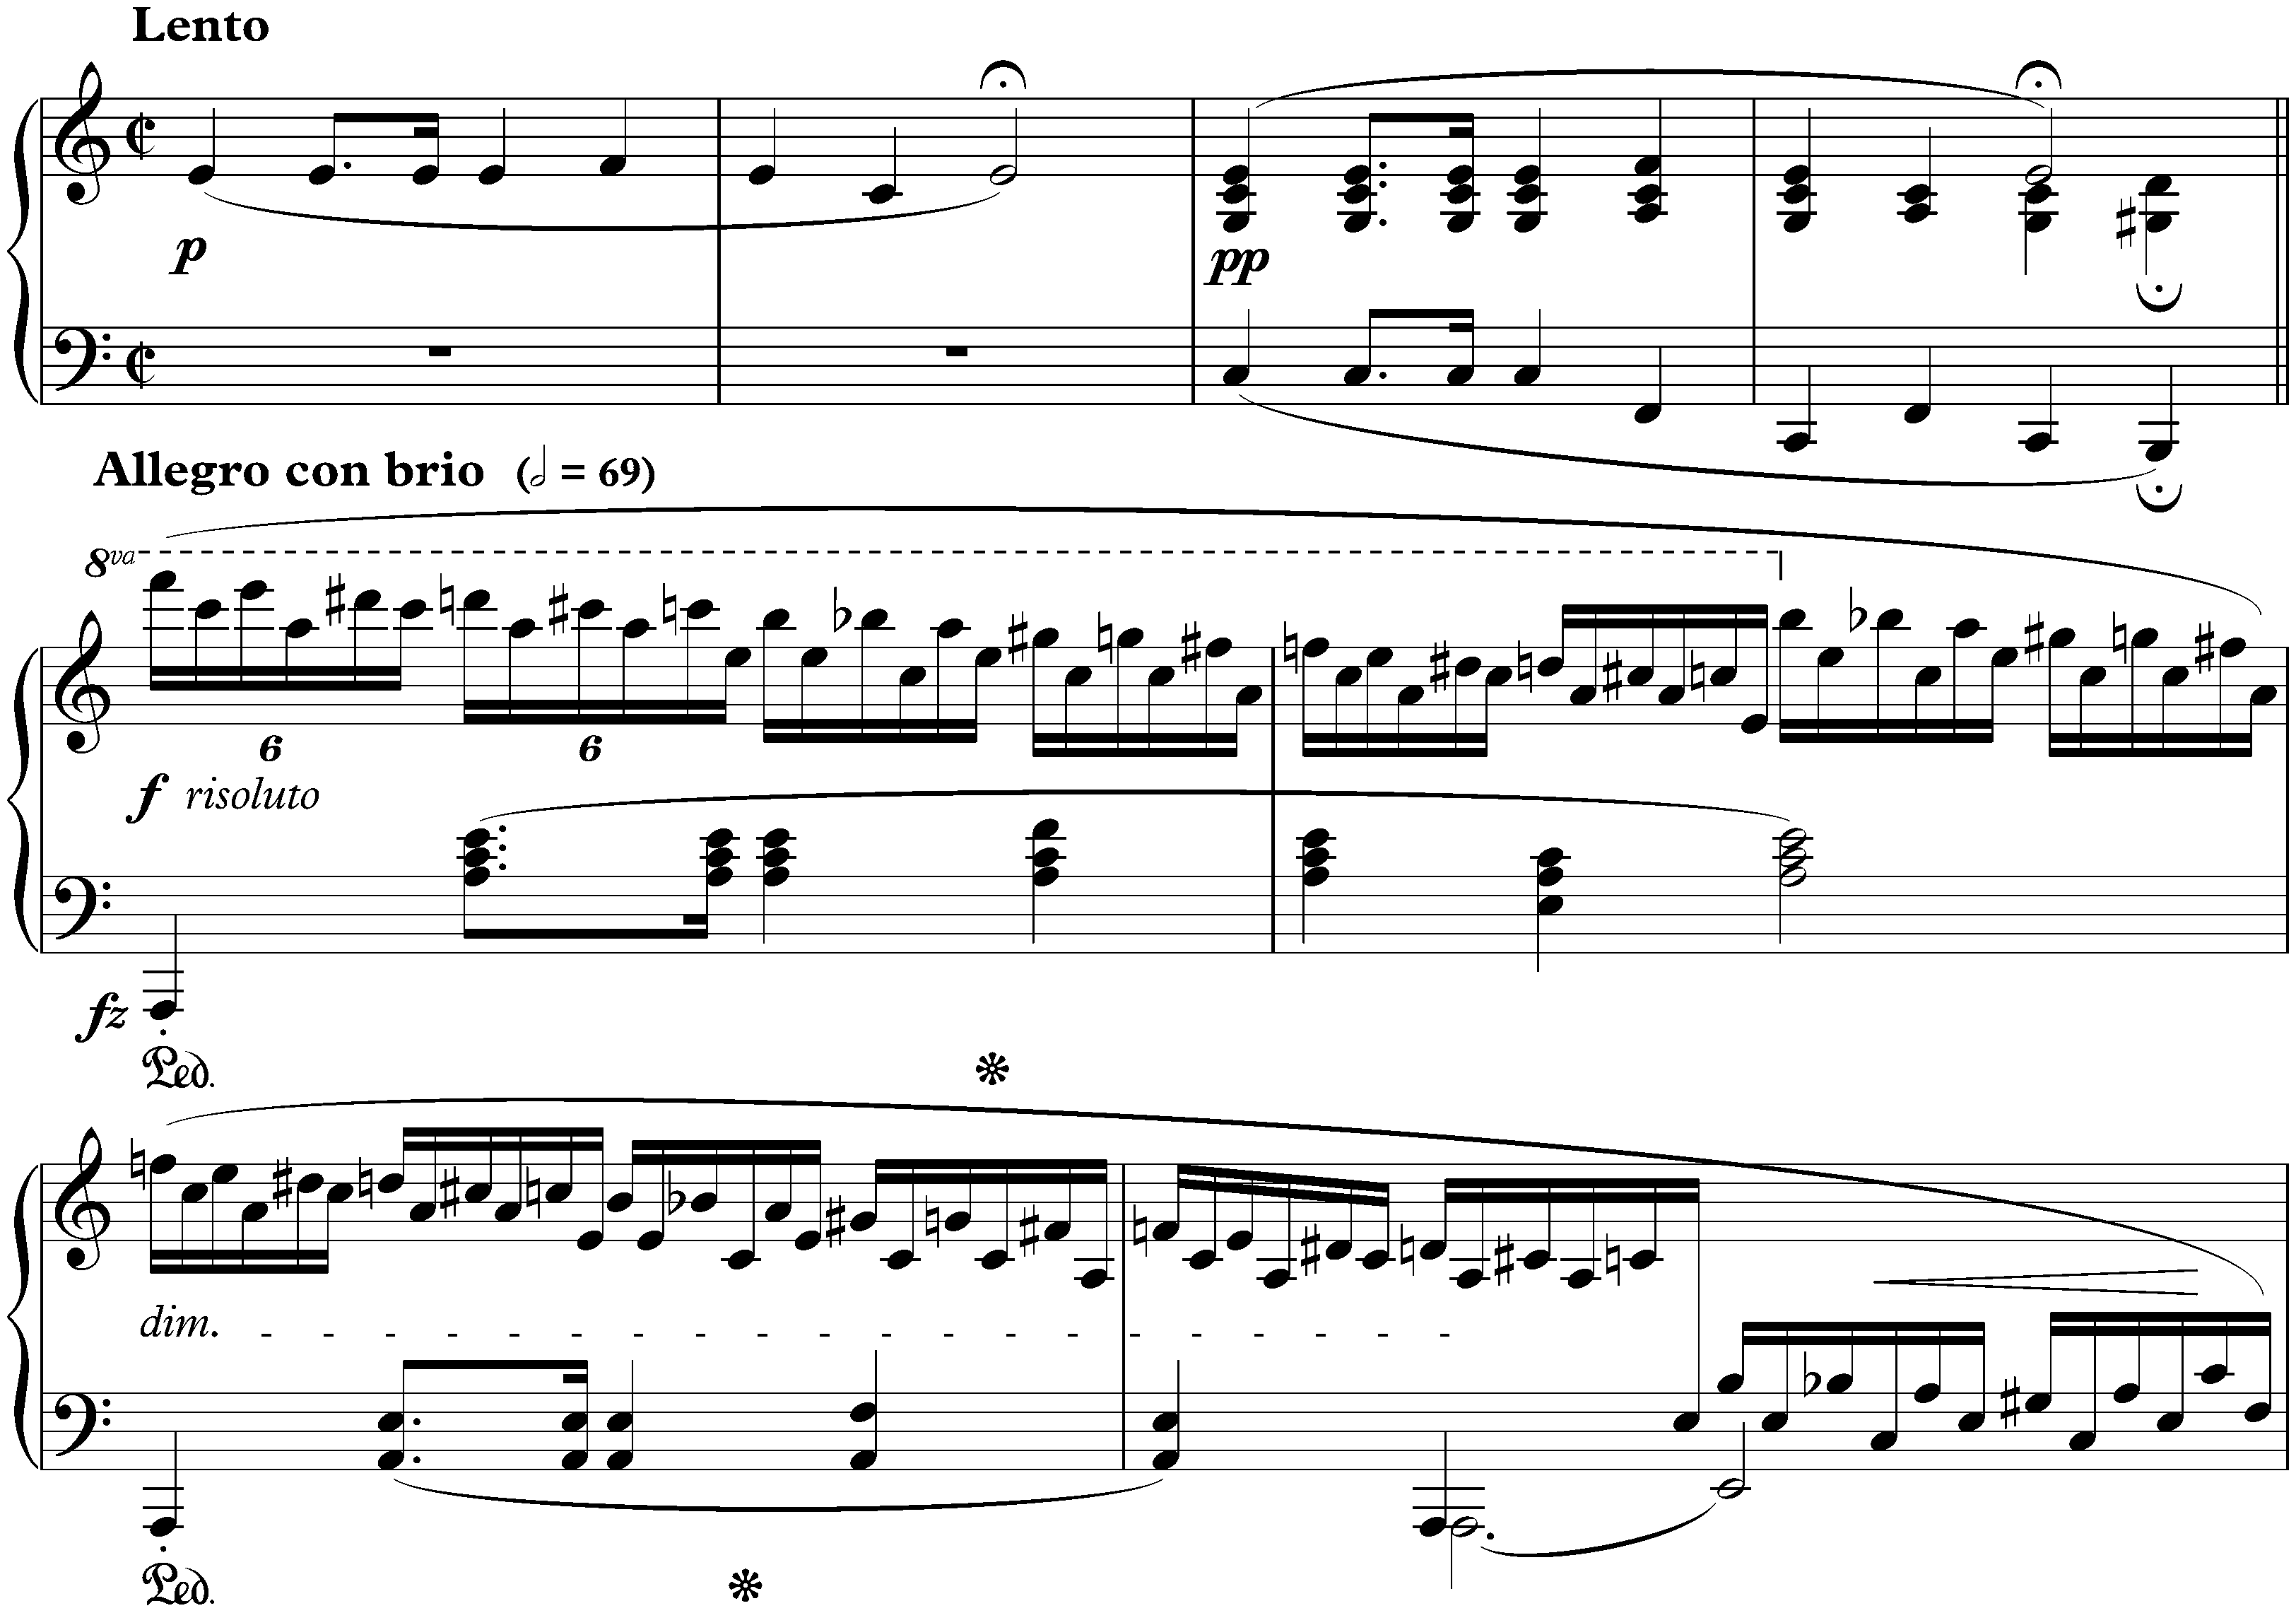 Twelve Études, op. 25; 11. A minor